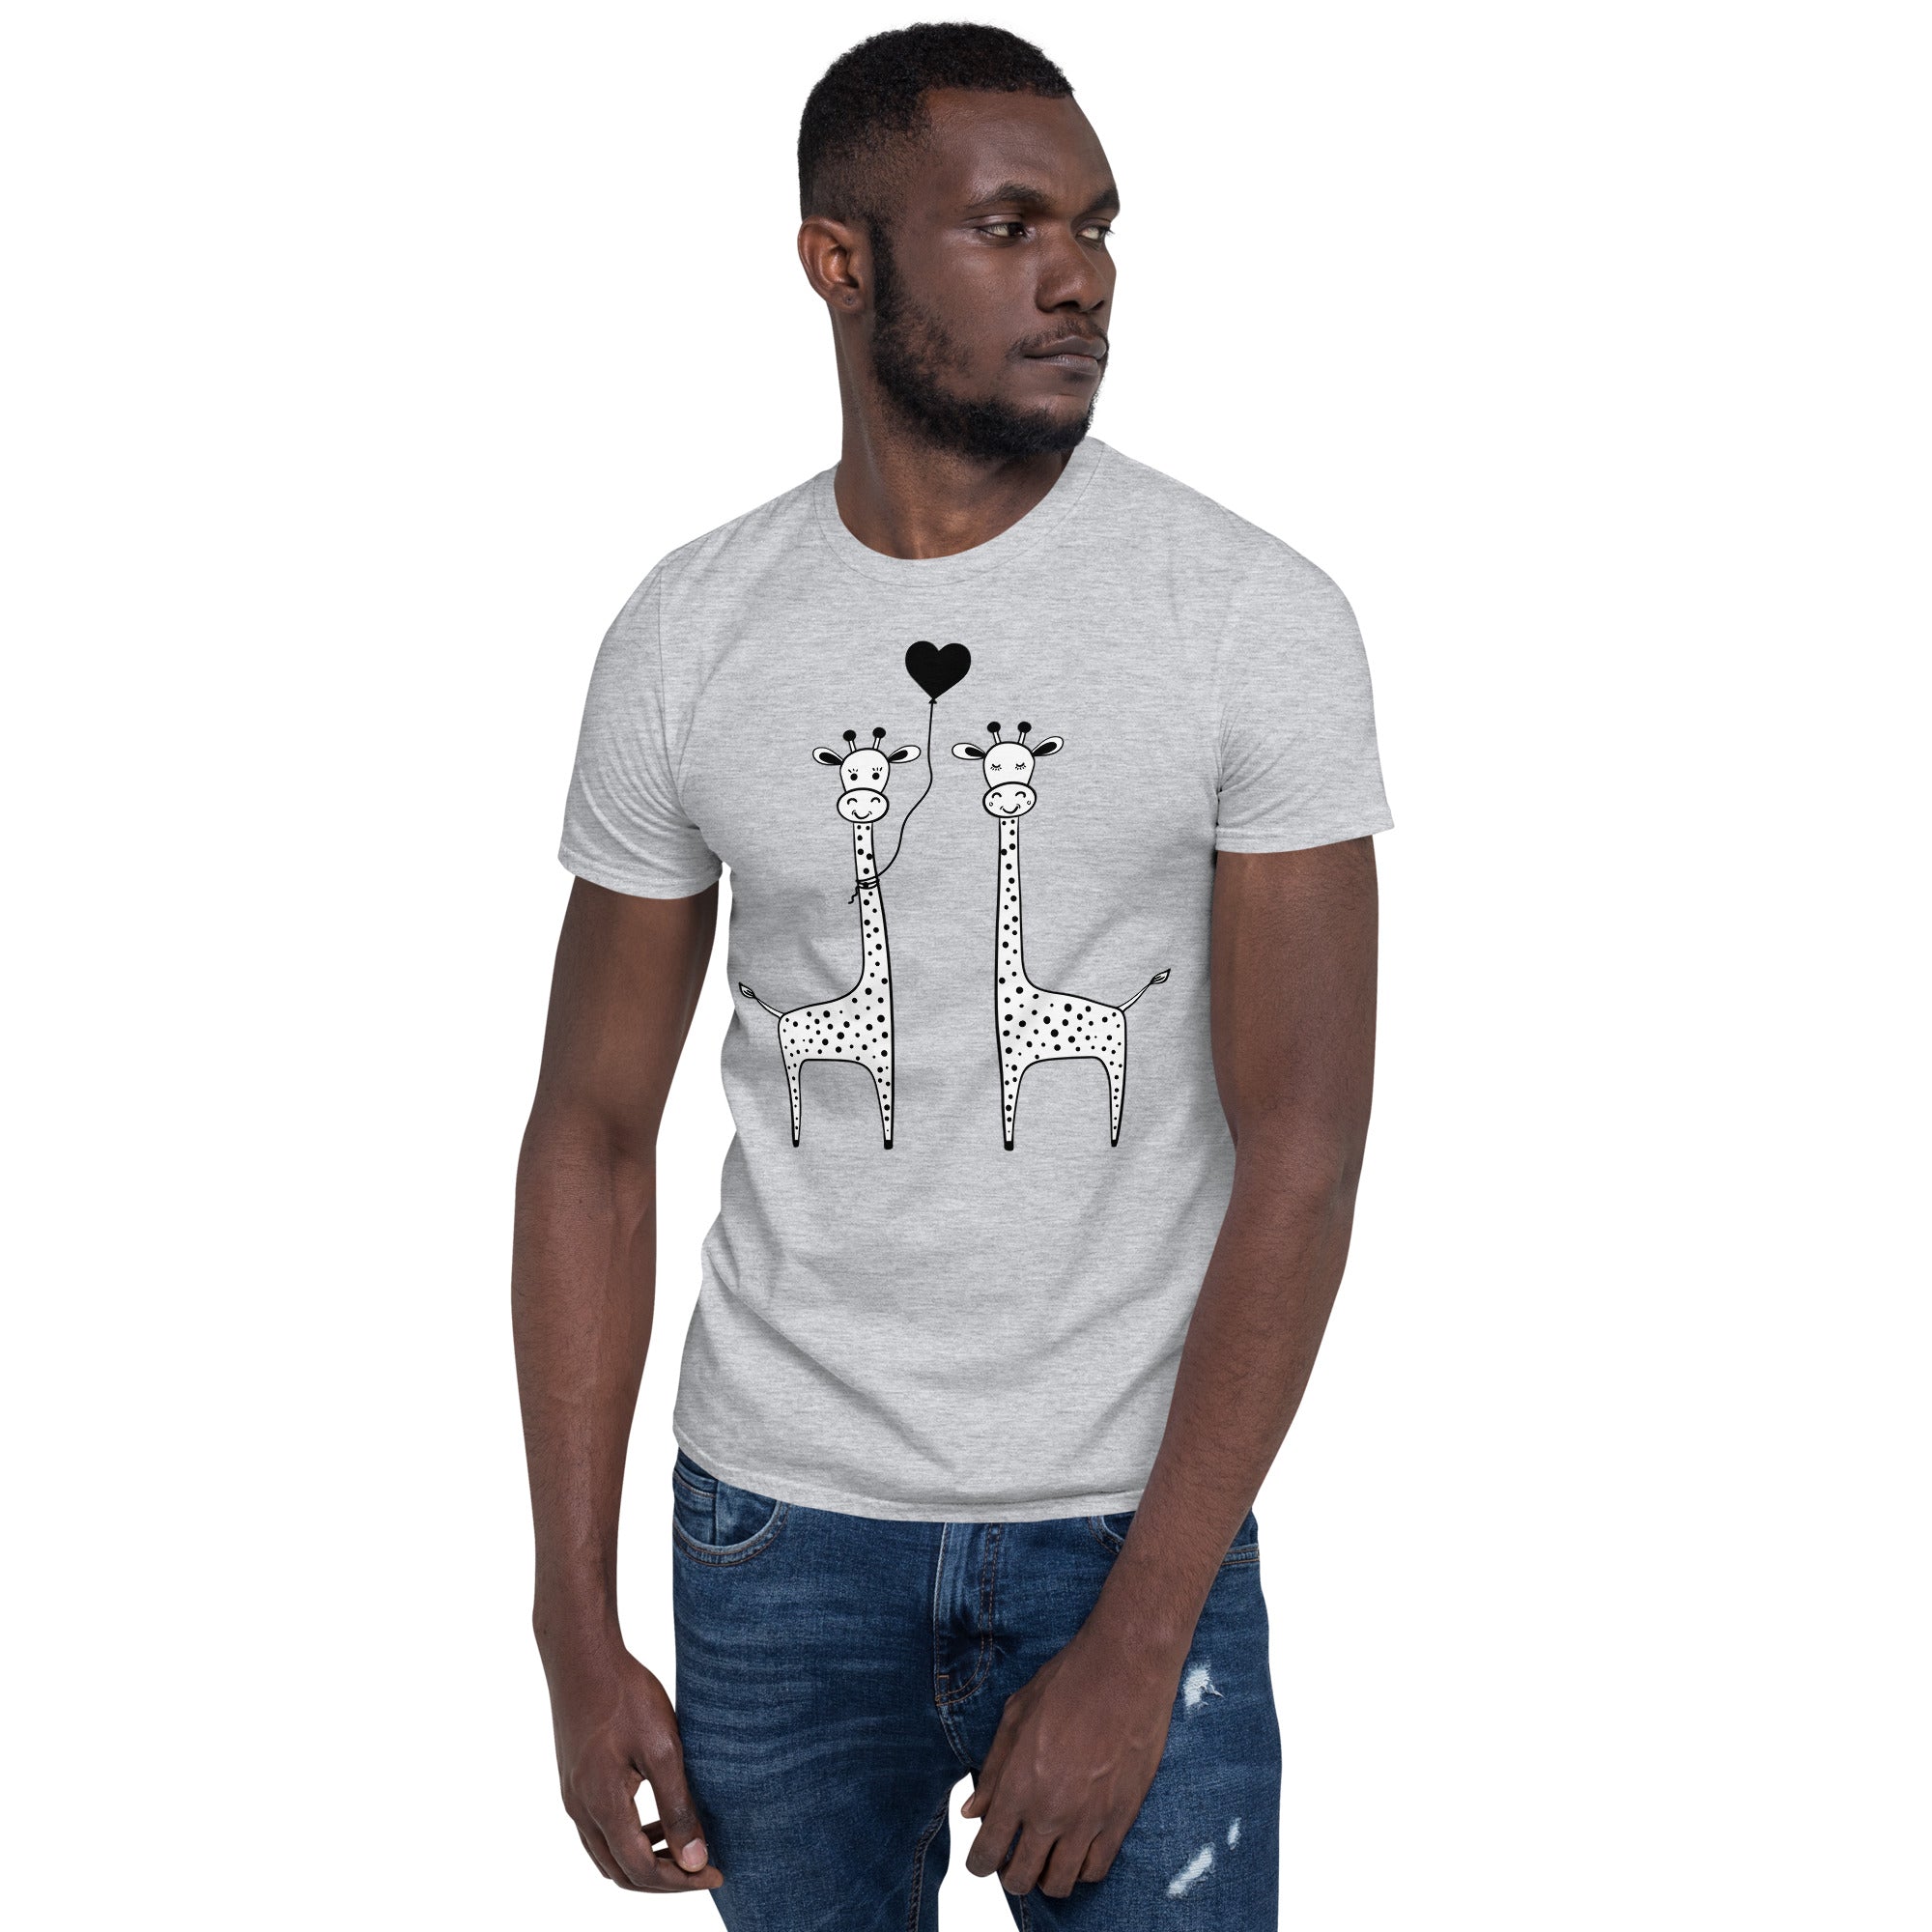 Love Giraffe - Short-Sleeve Unisex T-Shirt